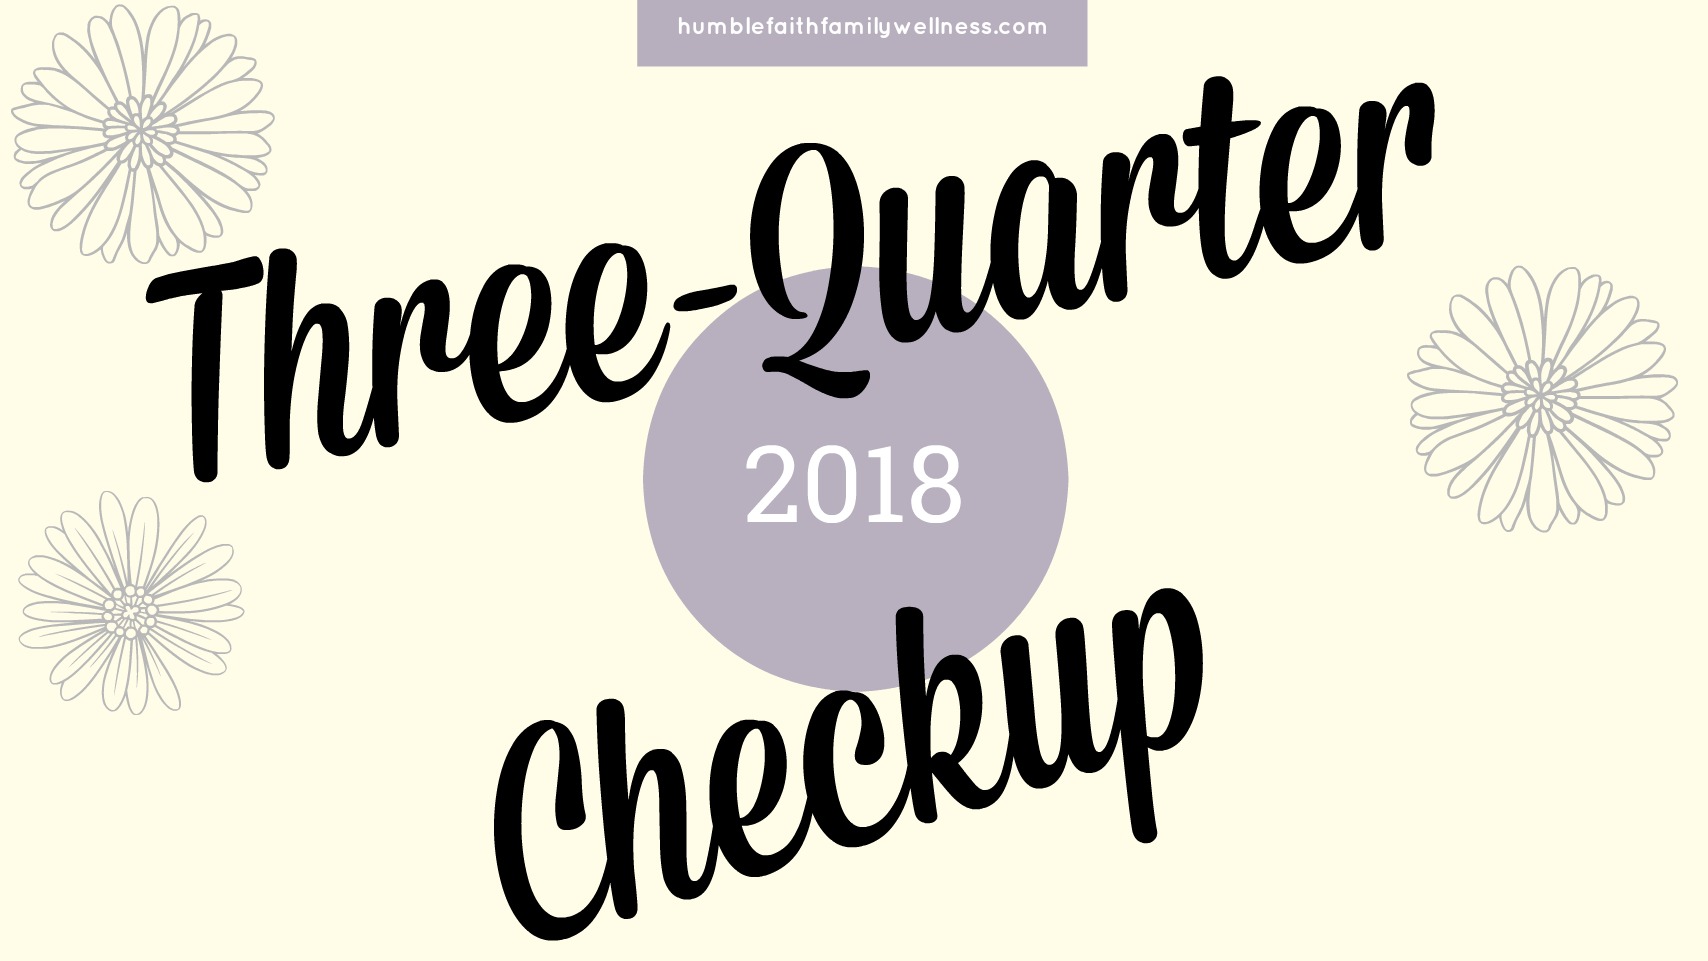 Featured 2018 Three-quarters checkup